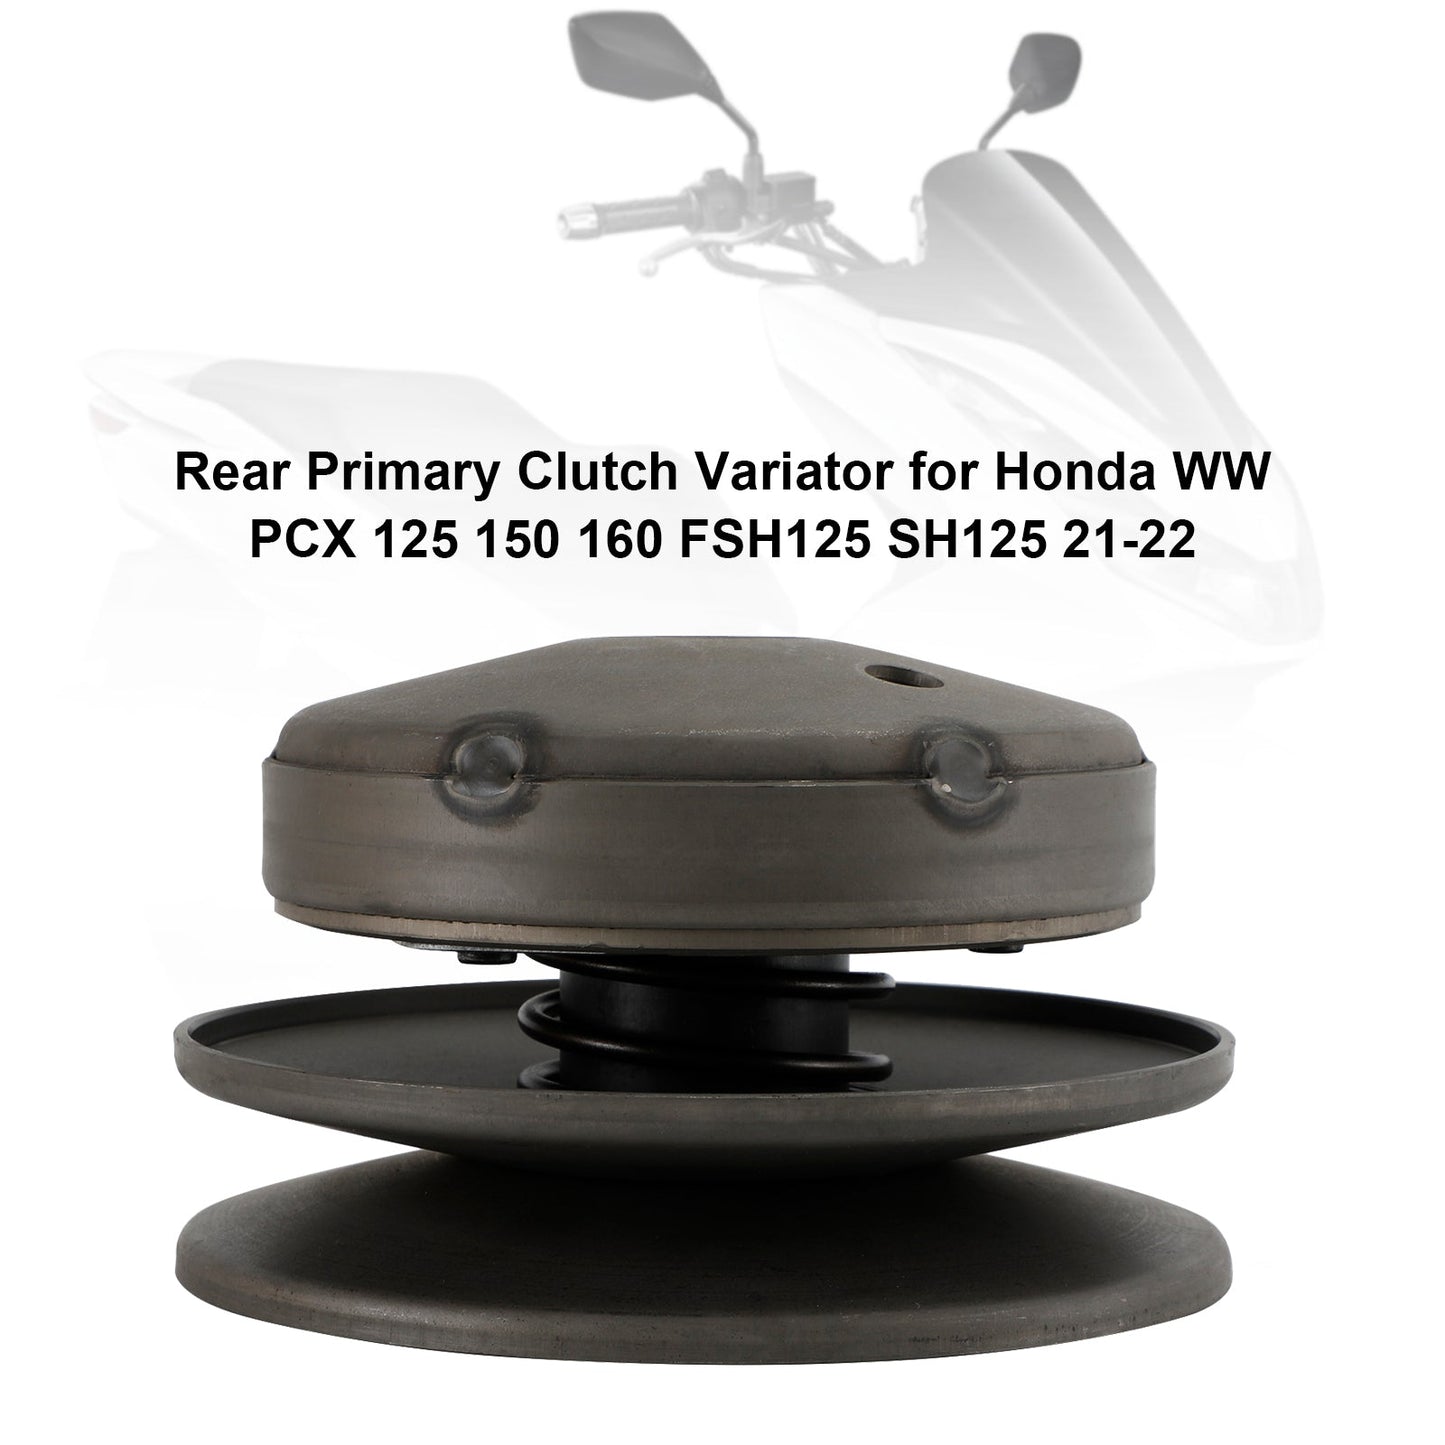 Rear Primary Clutch Variator For Honda Ww Pcx 125 150 160 Fsh125 Sh125 21-22